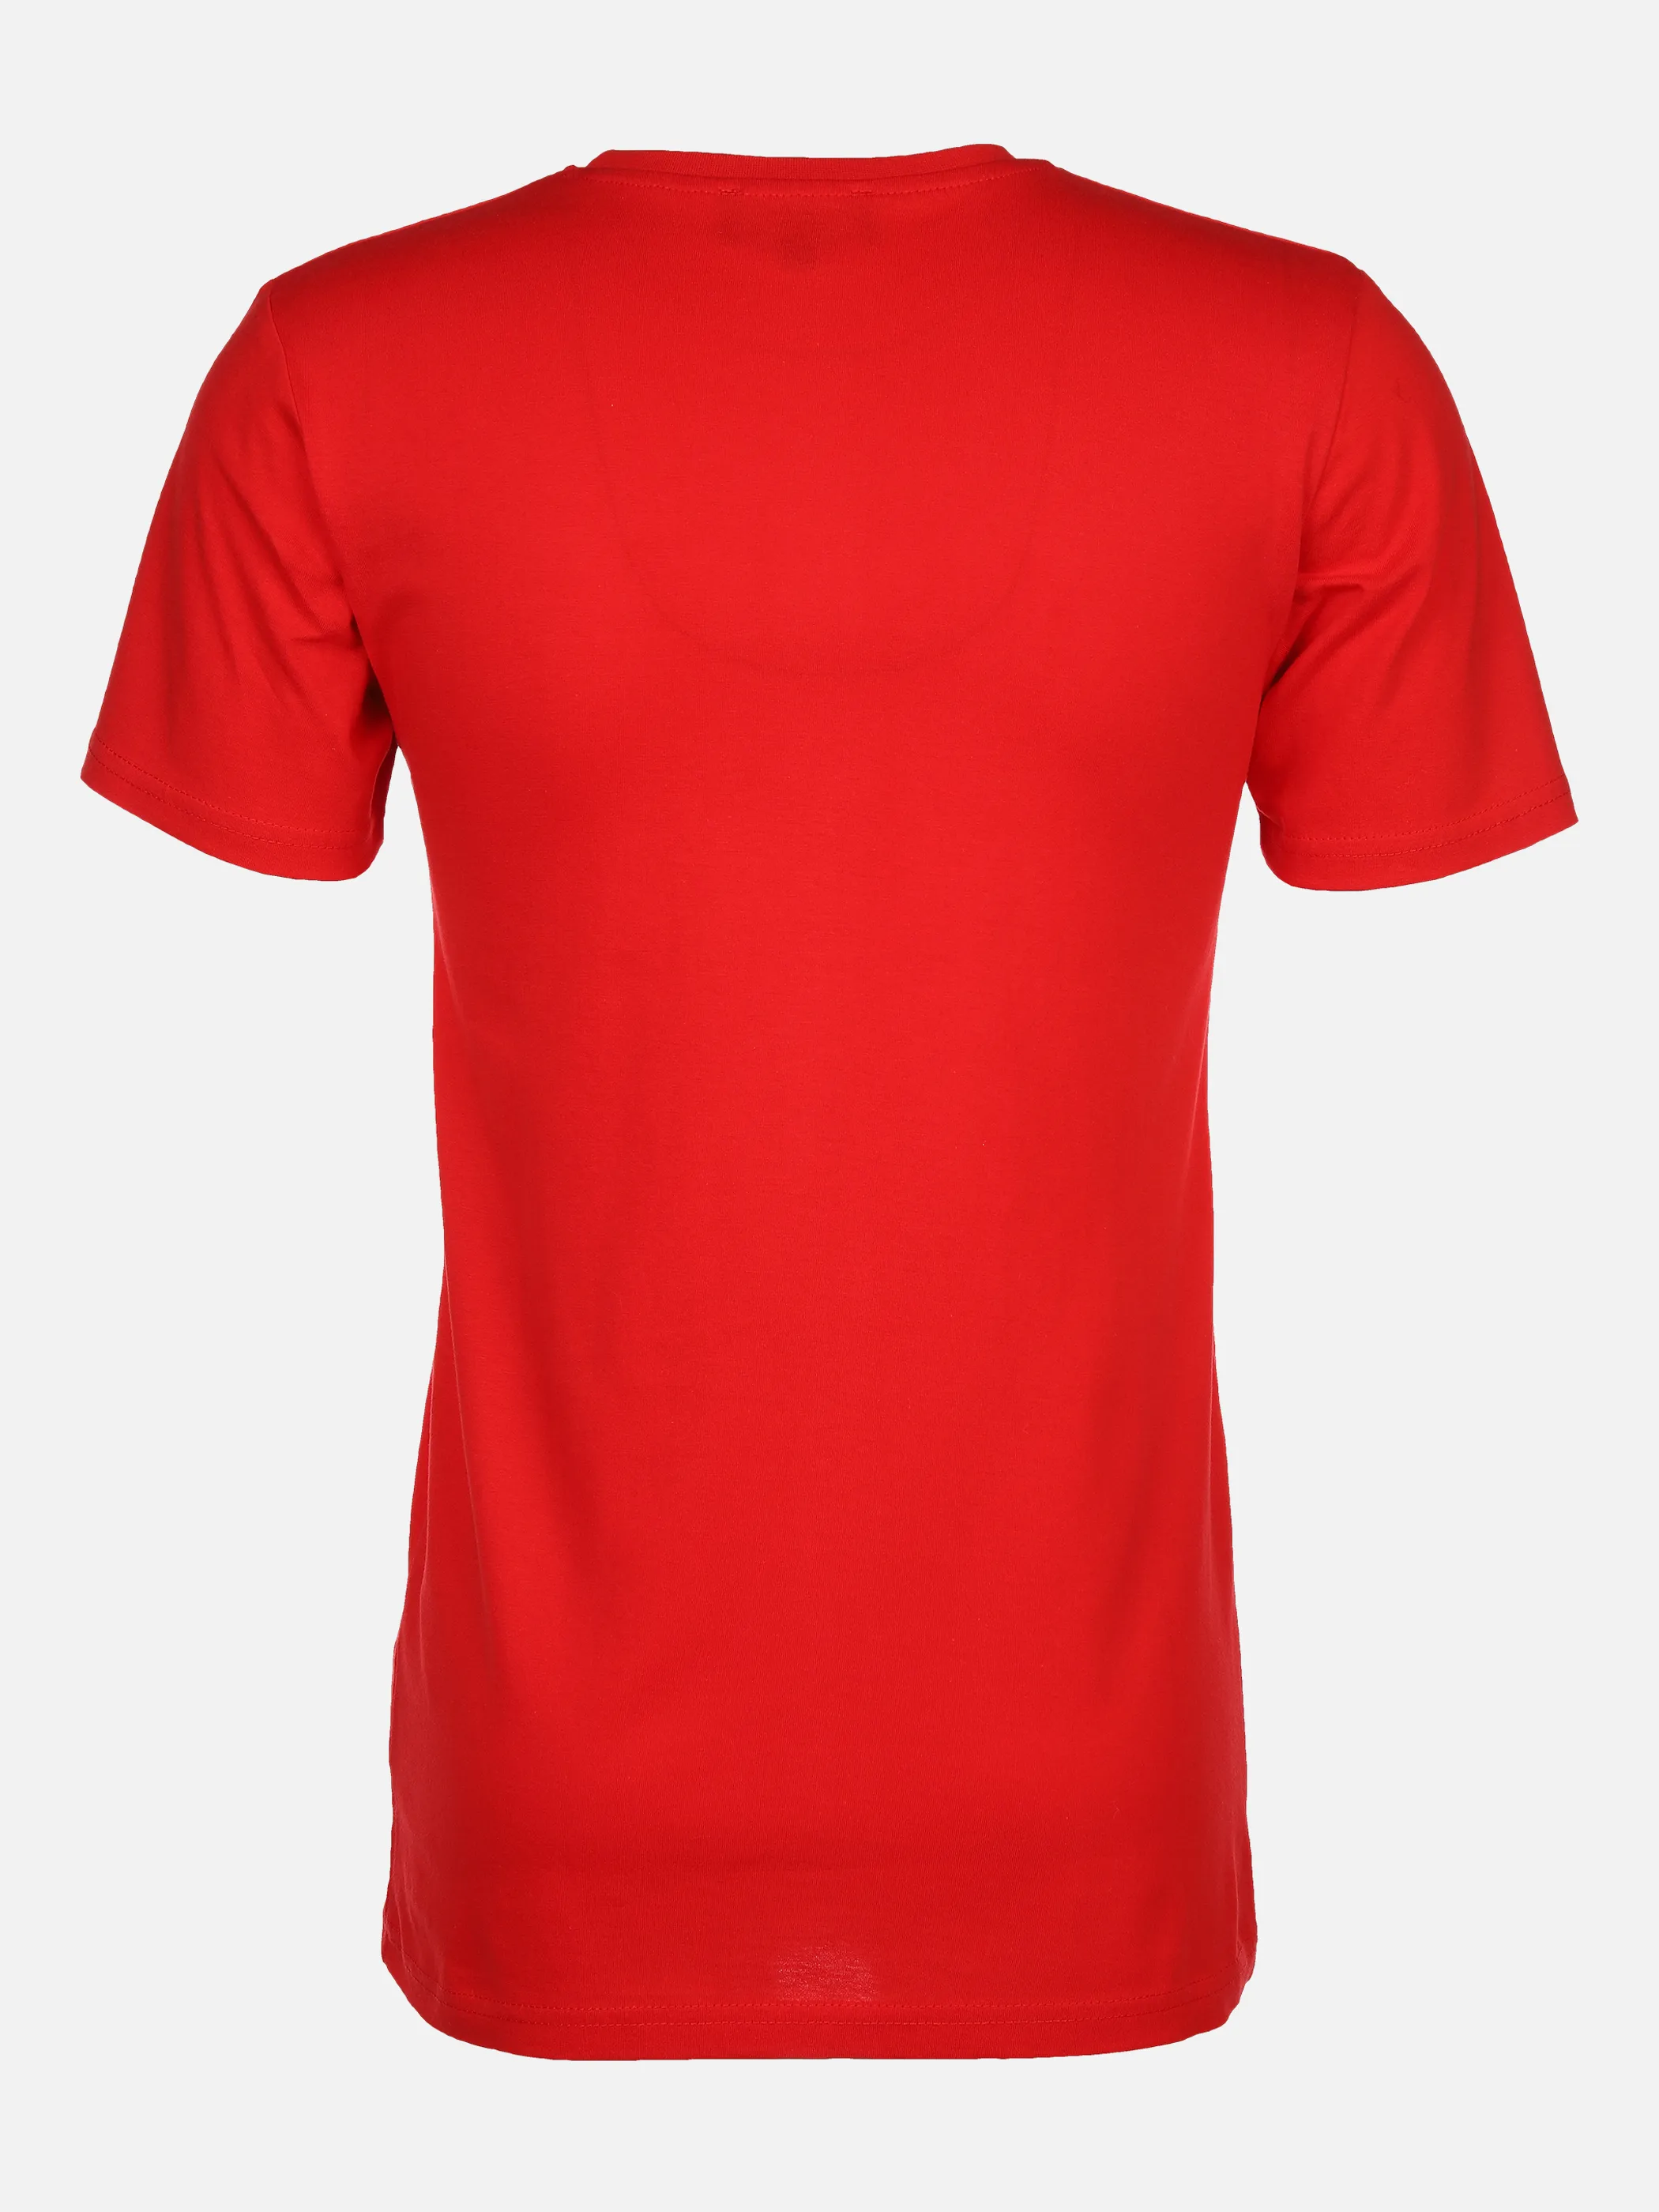 Harvey Miller He. T-Shirt 1/2 Arm Logo Rot 882848 RED 2